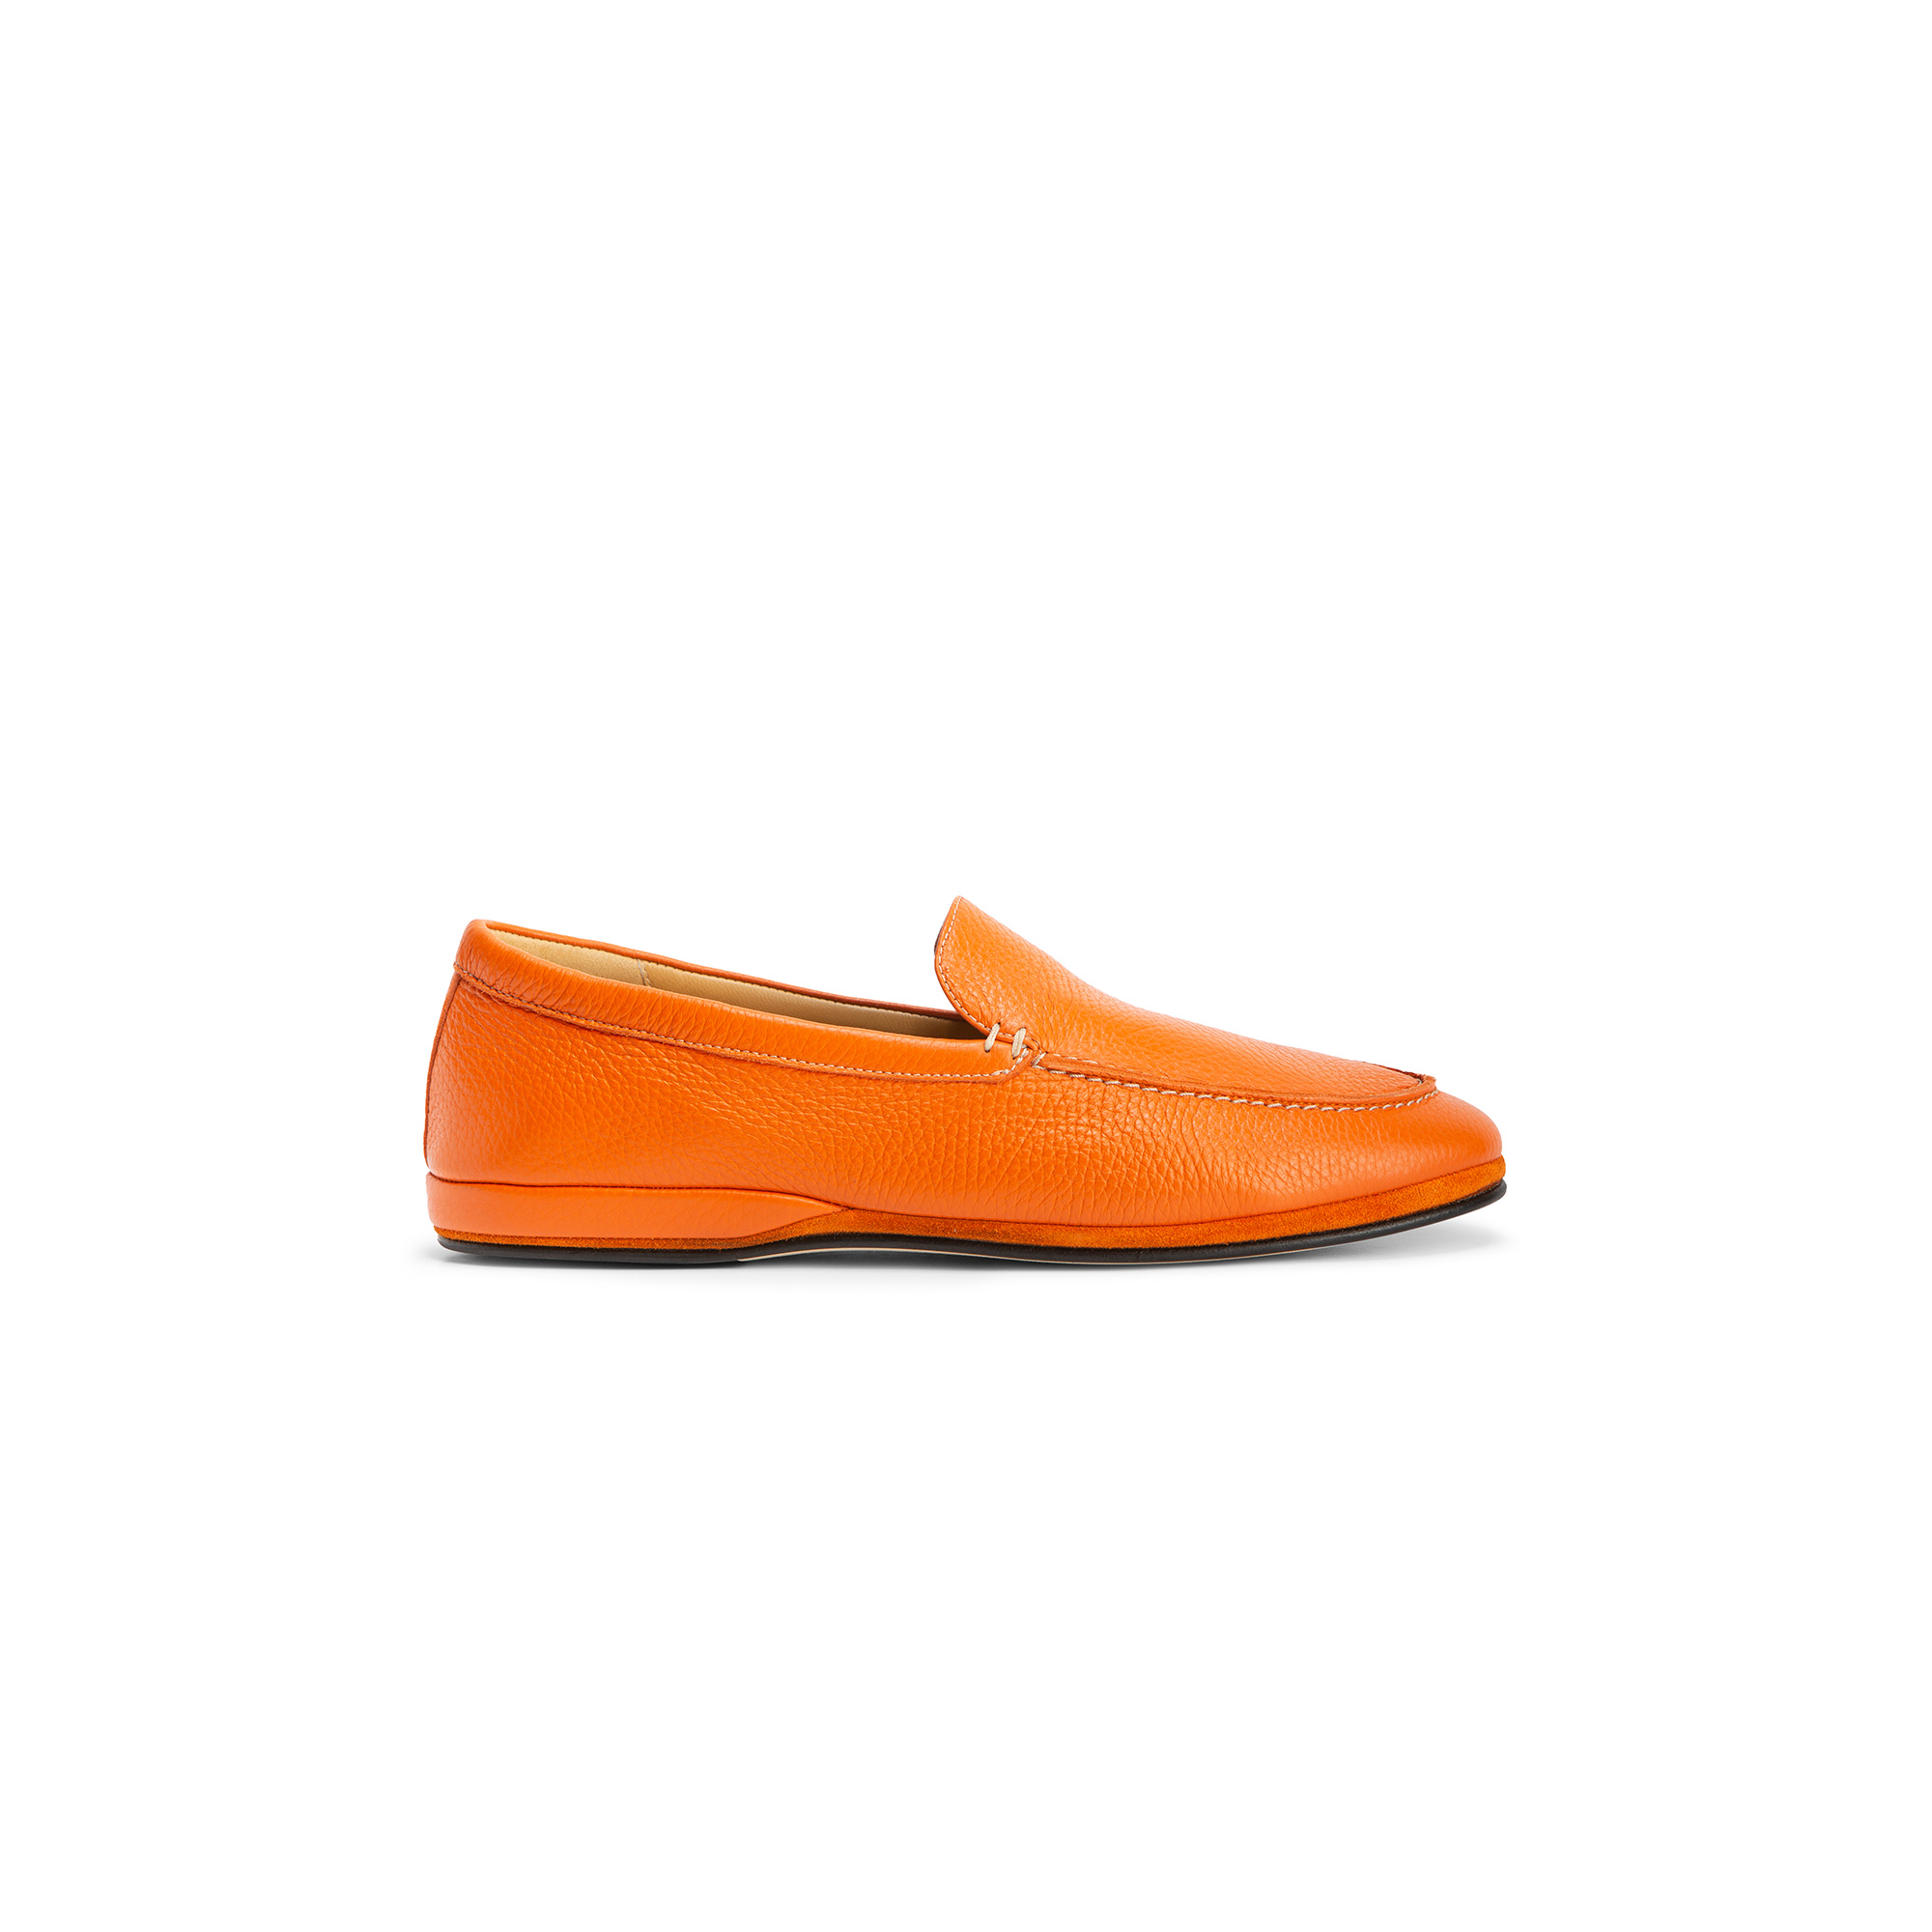 Pantofola chiusa esterno cervo arancio - Farfalla italian slippers